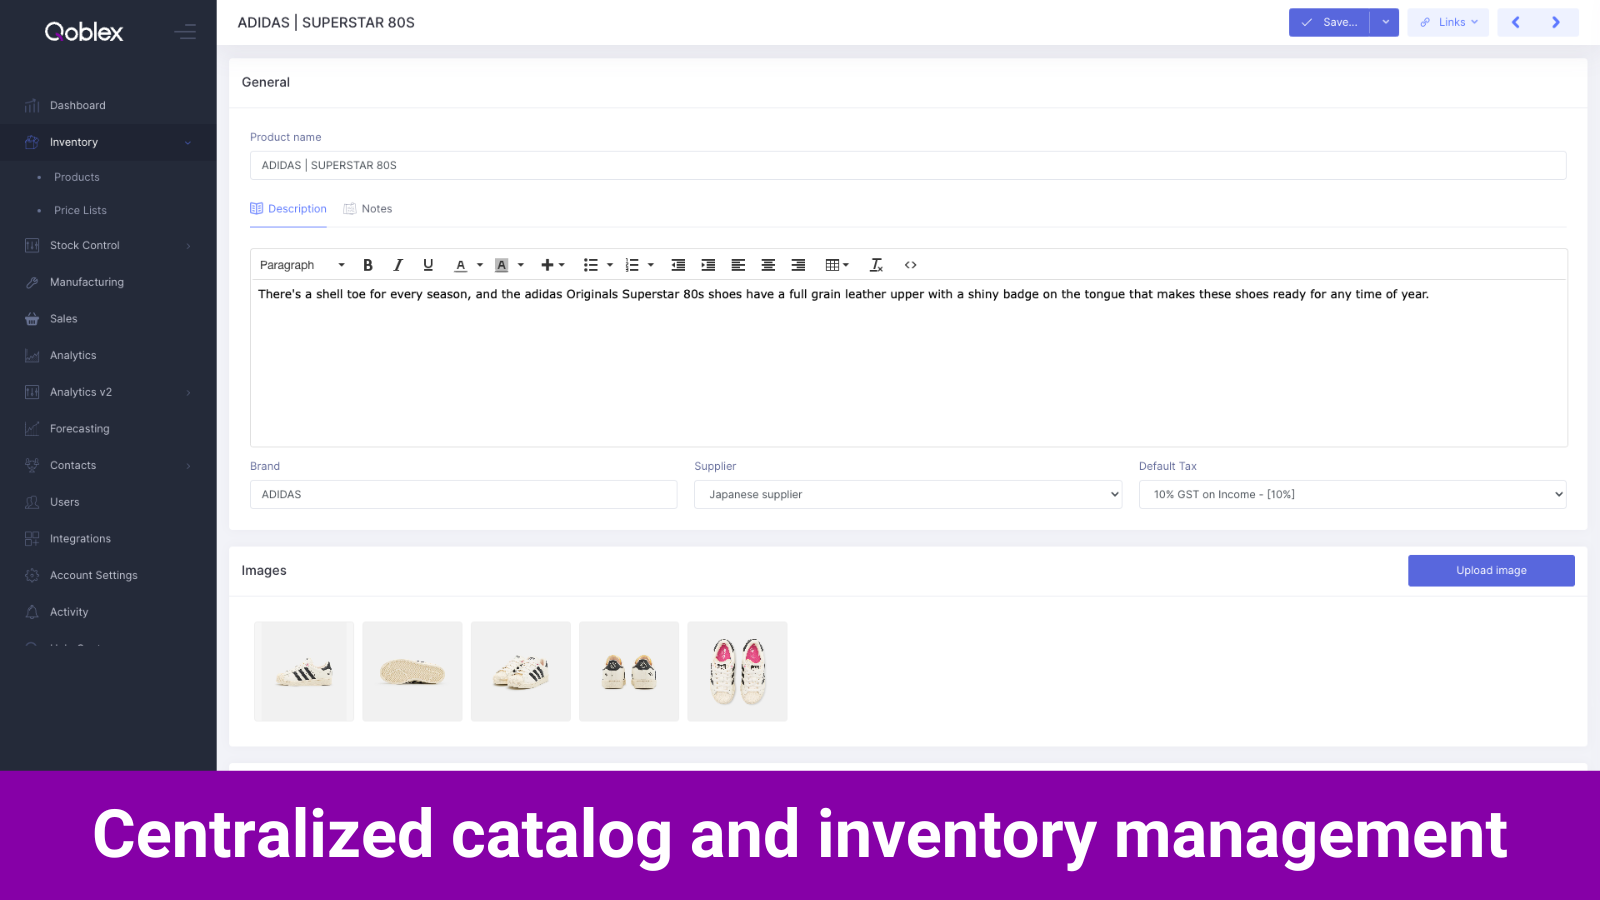 Qoblex - Centralized catalog and inventory management